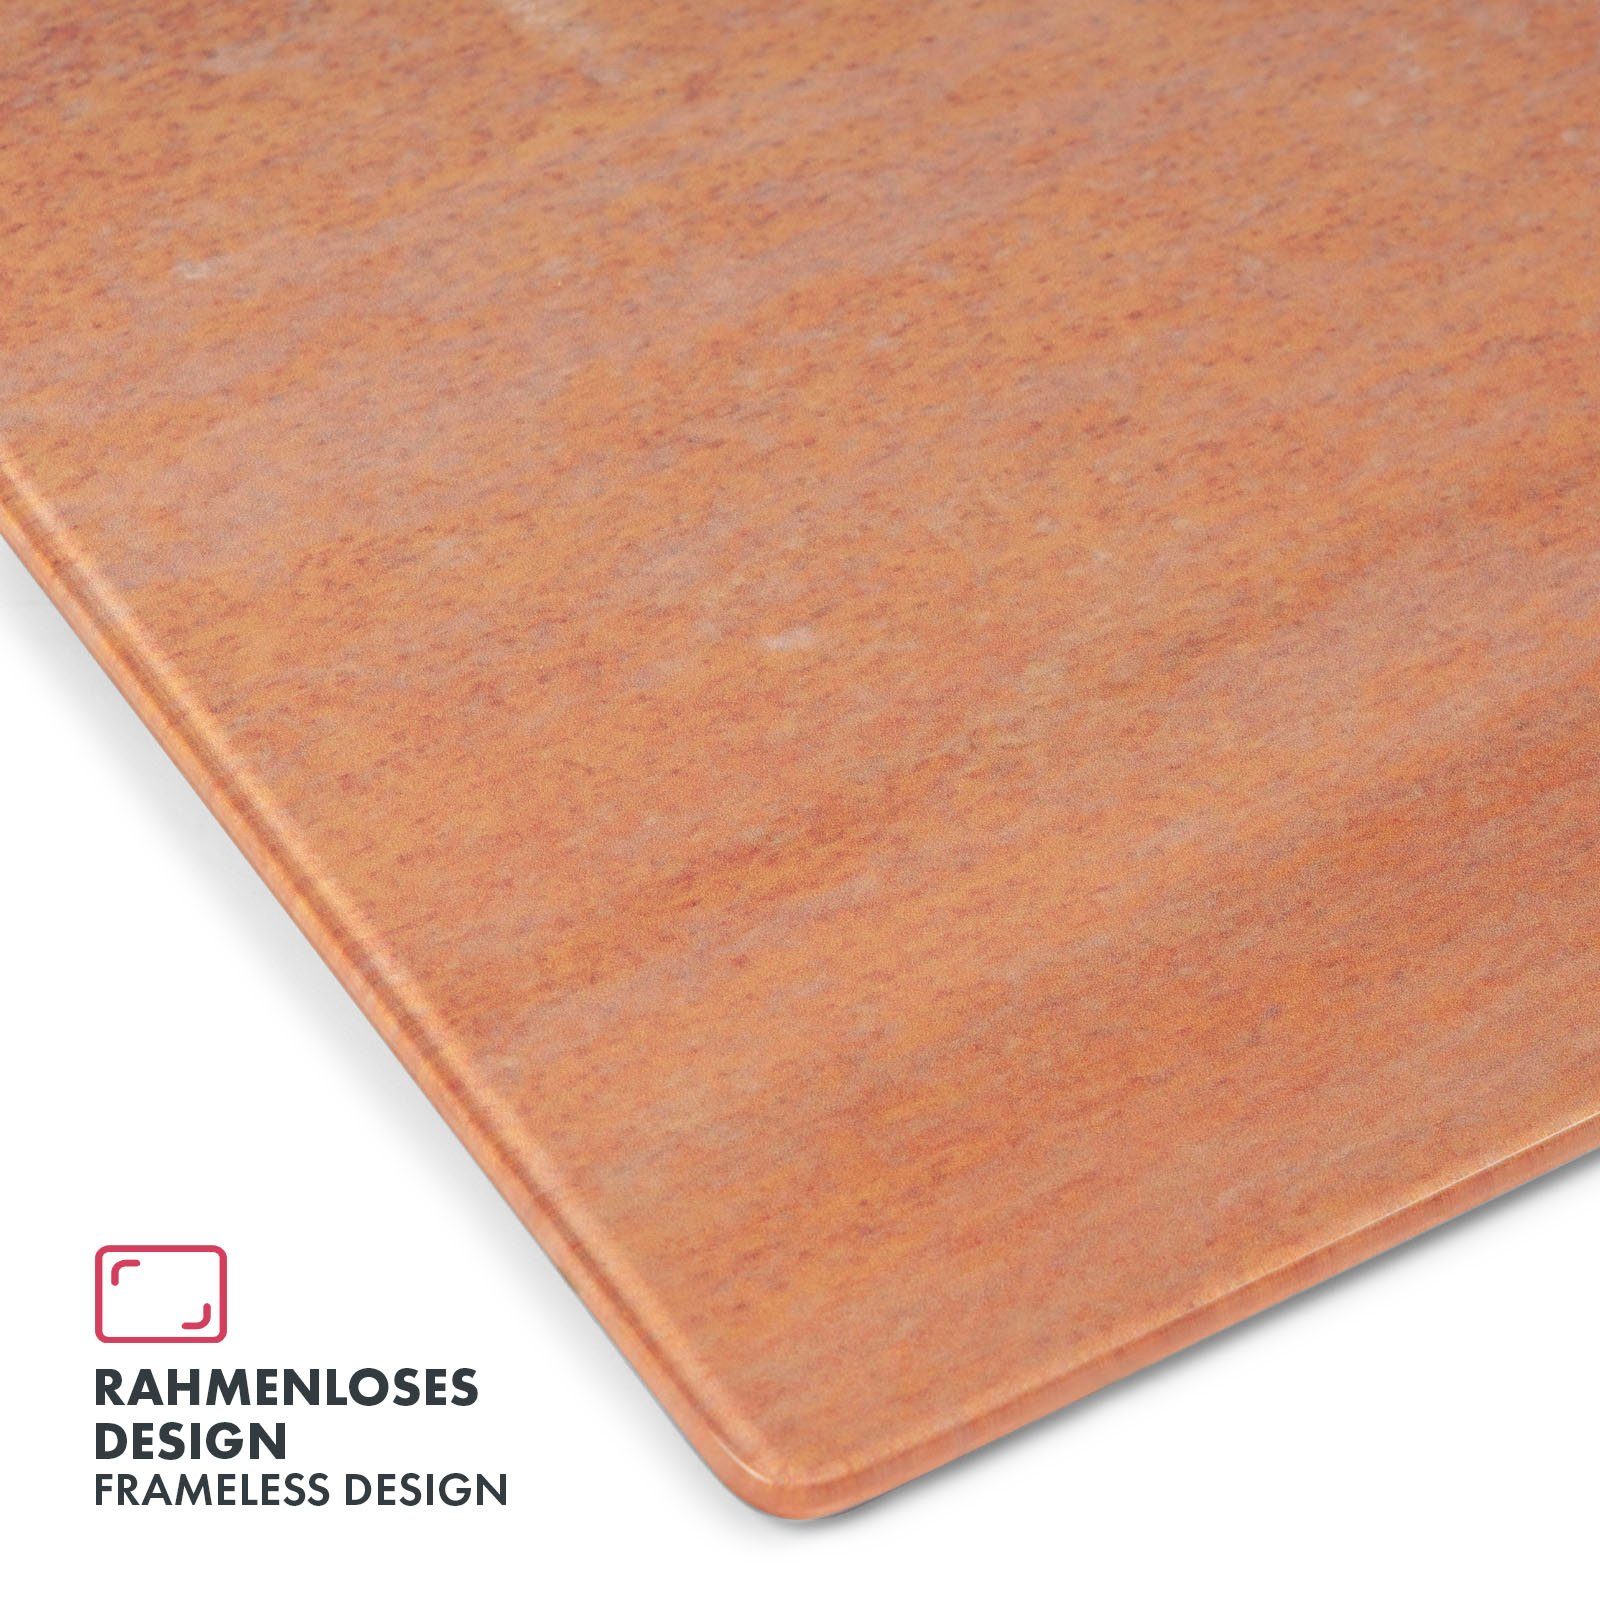 Montagematerial, Brush Farben & Verschiedene Rot Karat Magnete Design-Glas-Memoboard, & - Größen Inkl. Memoboard